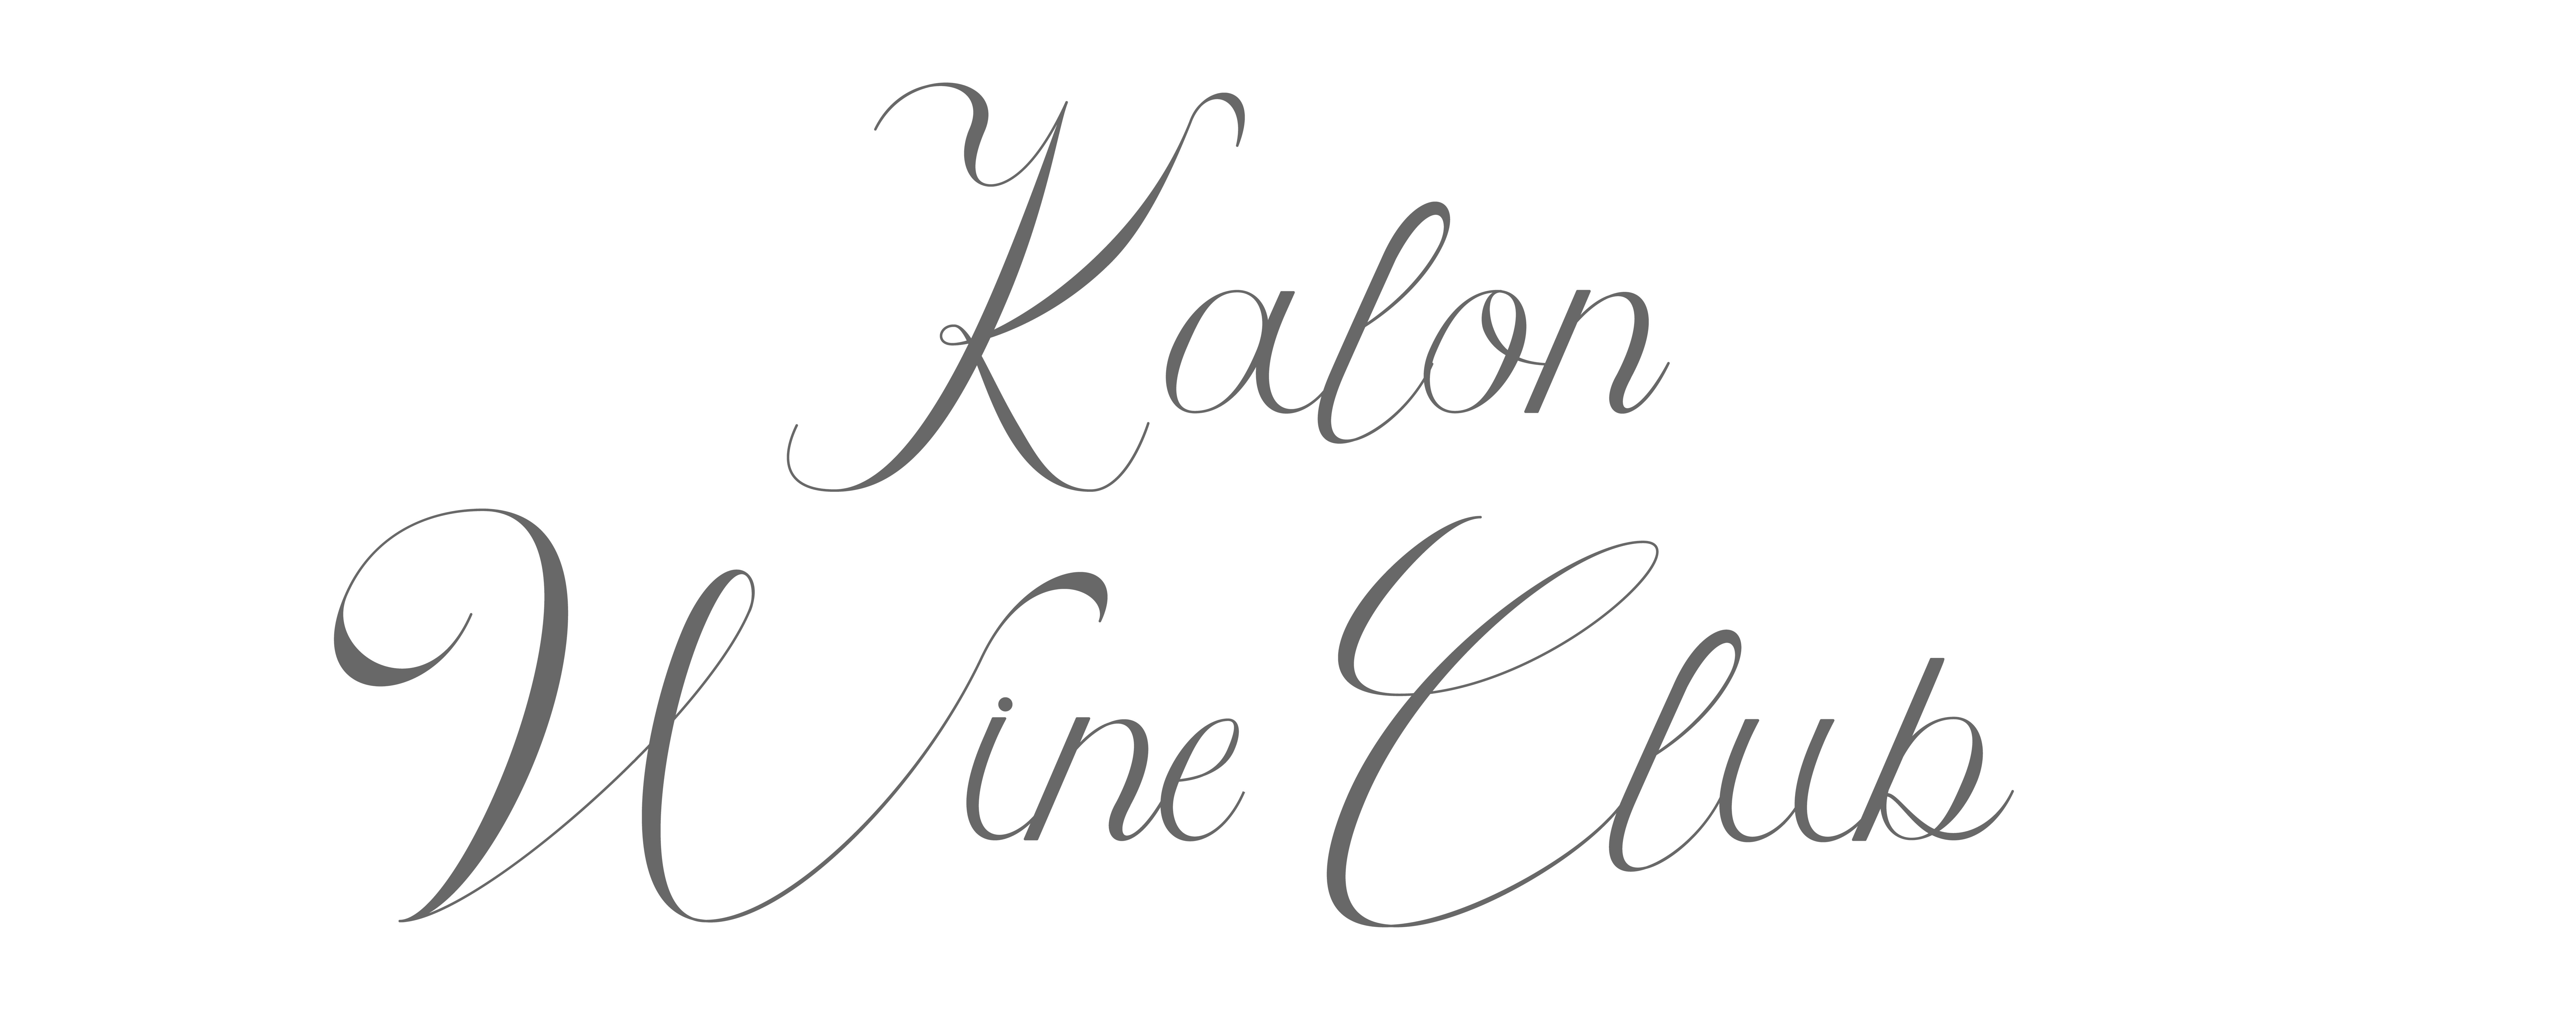 Gray Kalon Wordmark